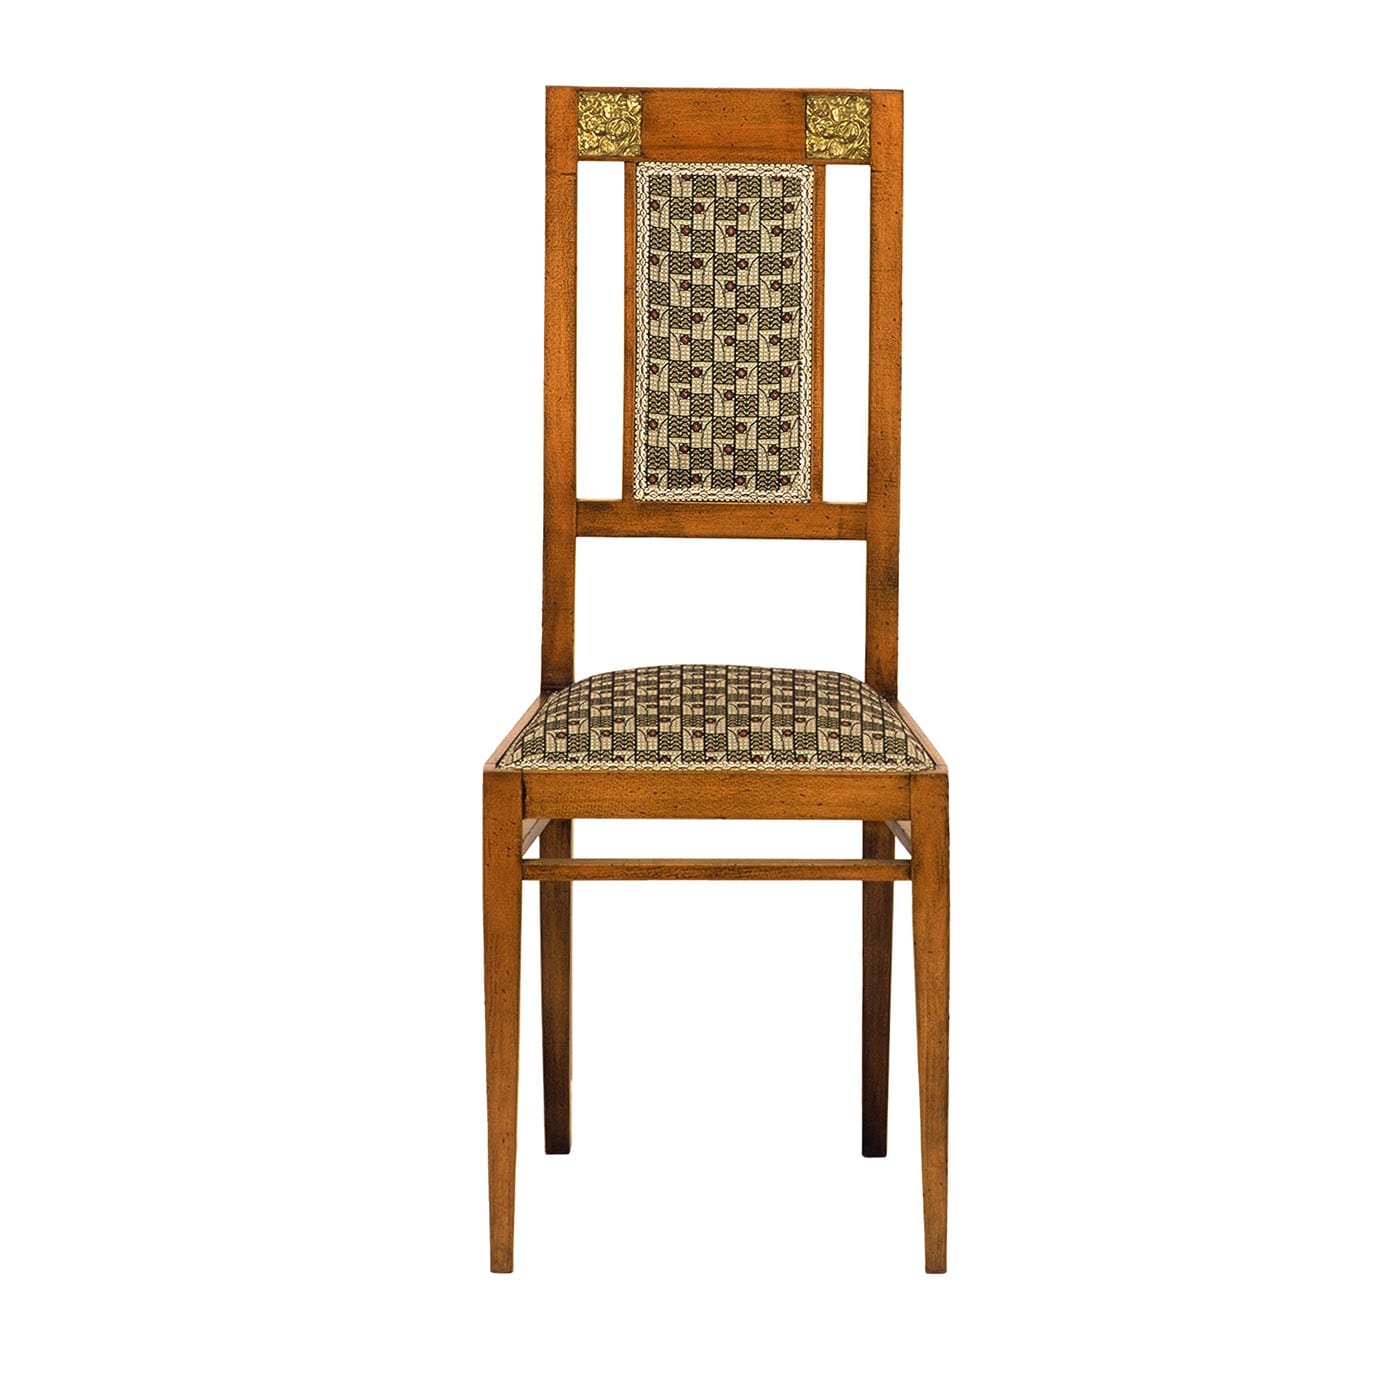 Italian Art Nouveau-Style Beech Chair - Cugini Lanzani